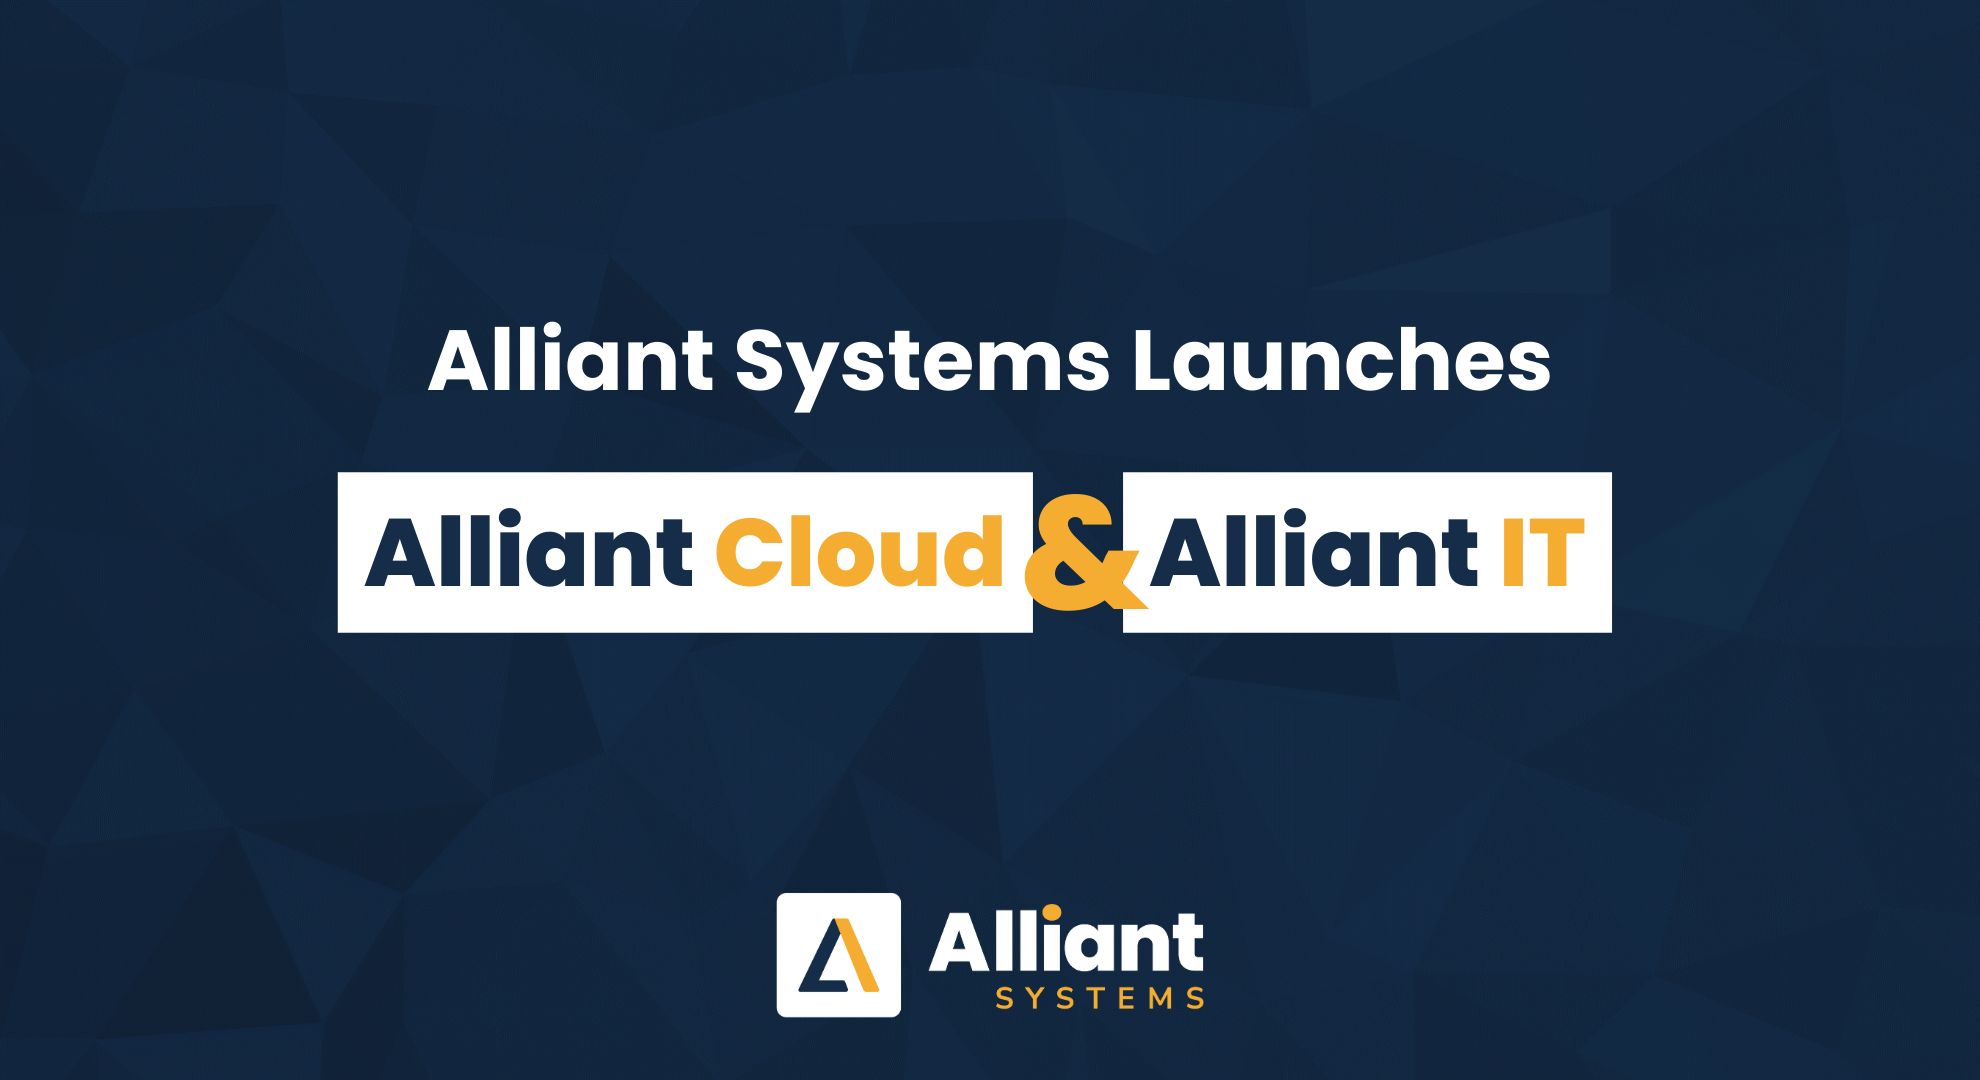 Alliant IT and Alliant Cloud